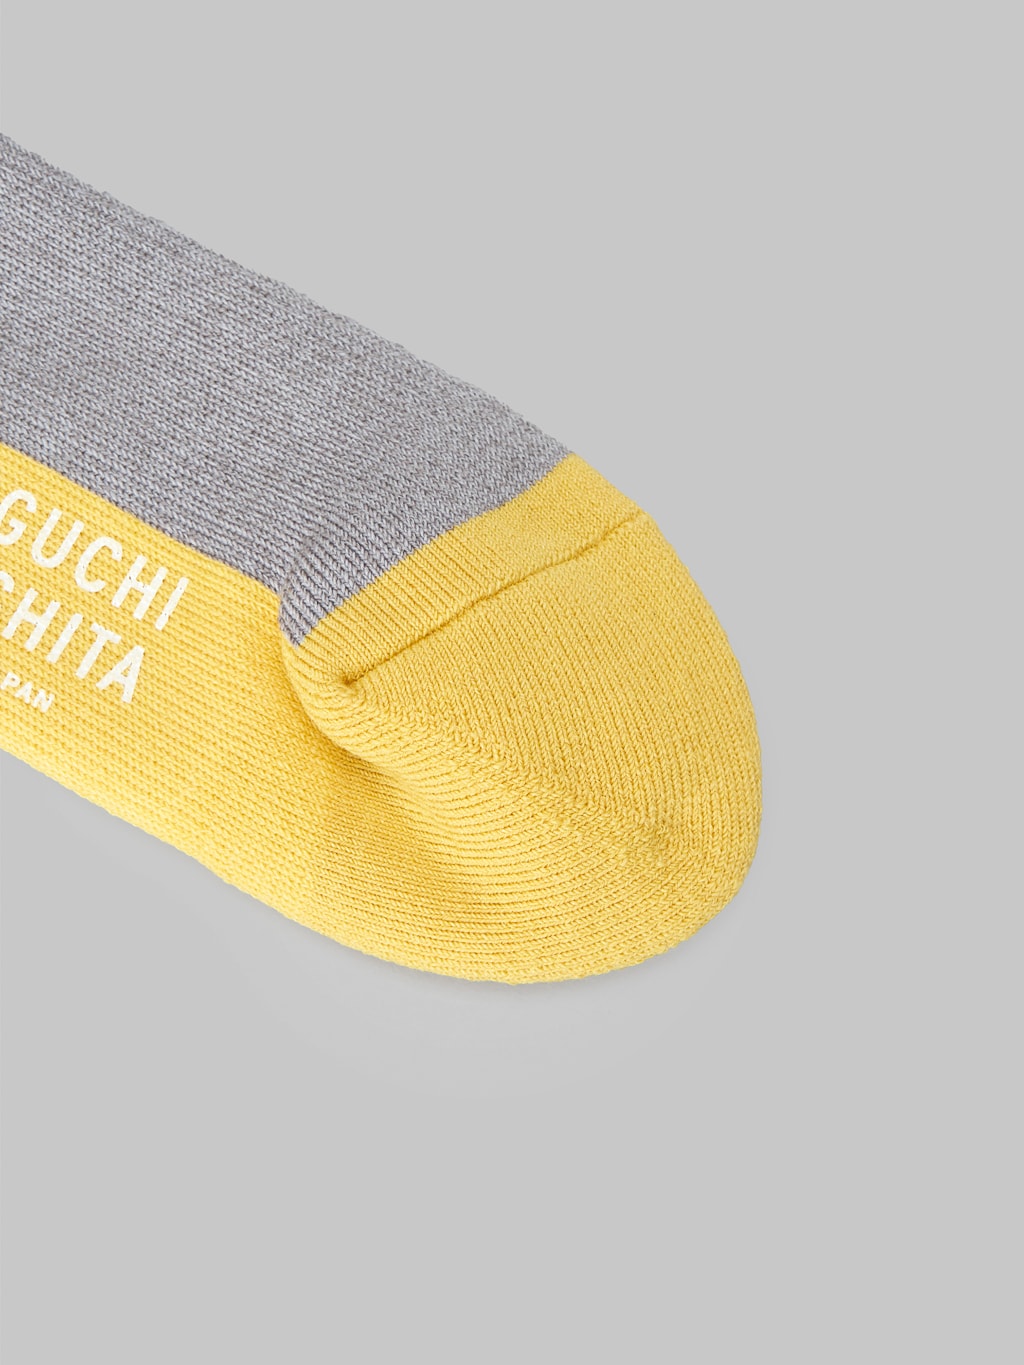 Nishiguchi Kutsushita Wool Pile Walk Socks light grey fabric texture